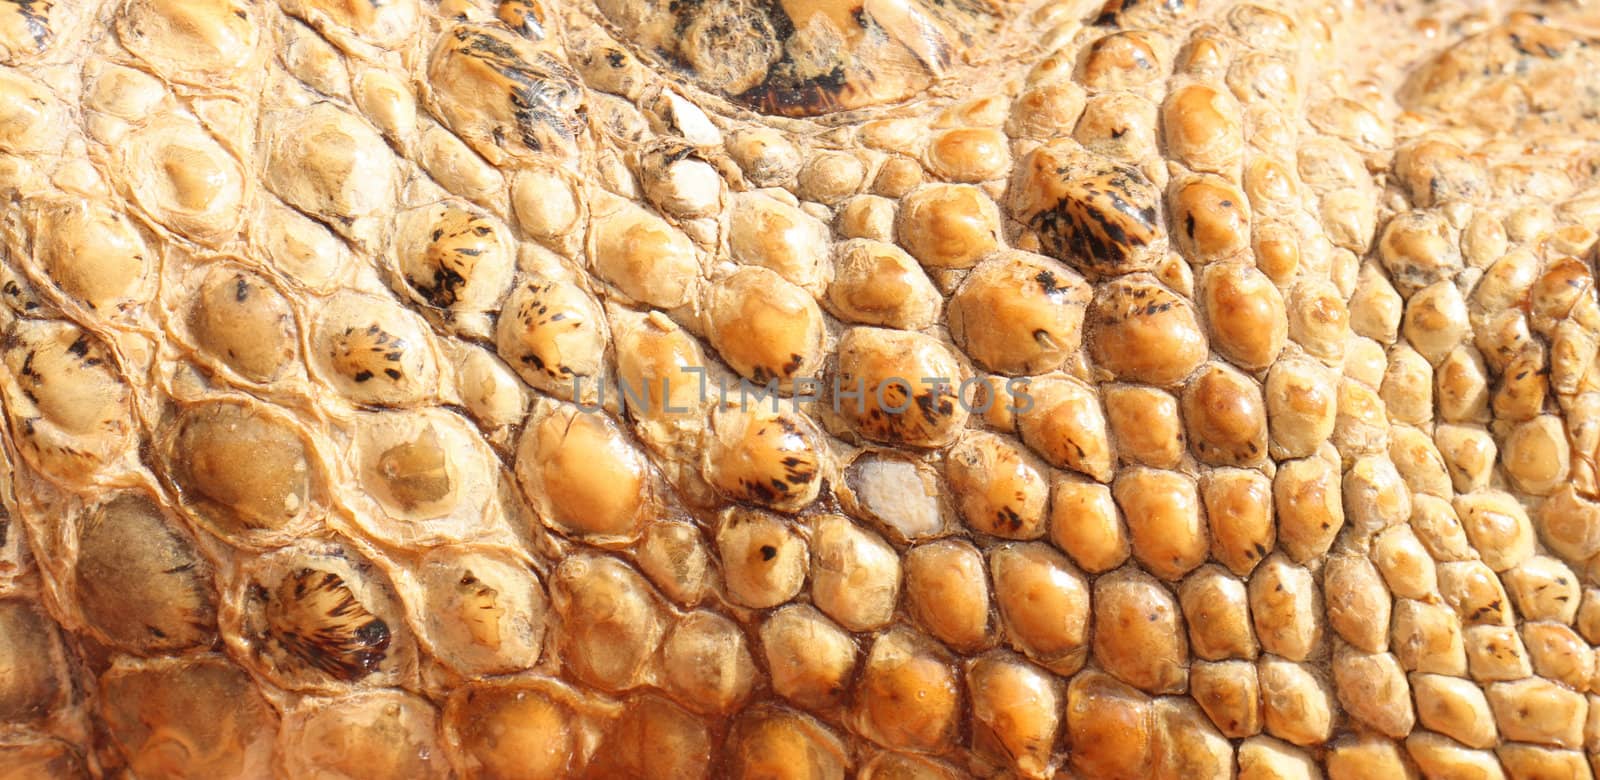 aligator skin by jonnysek